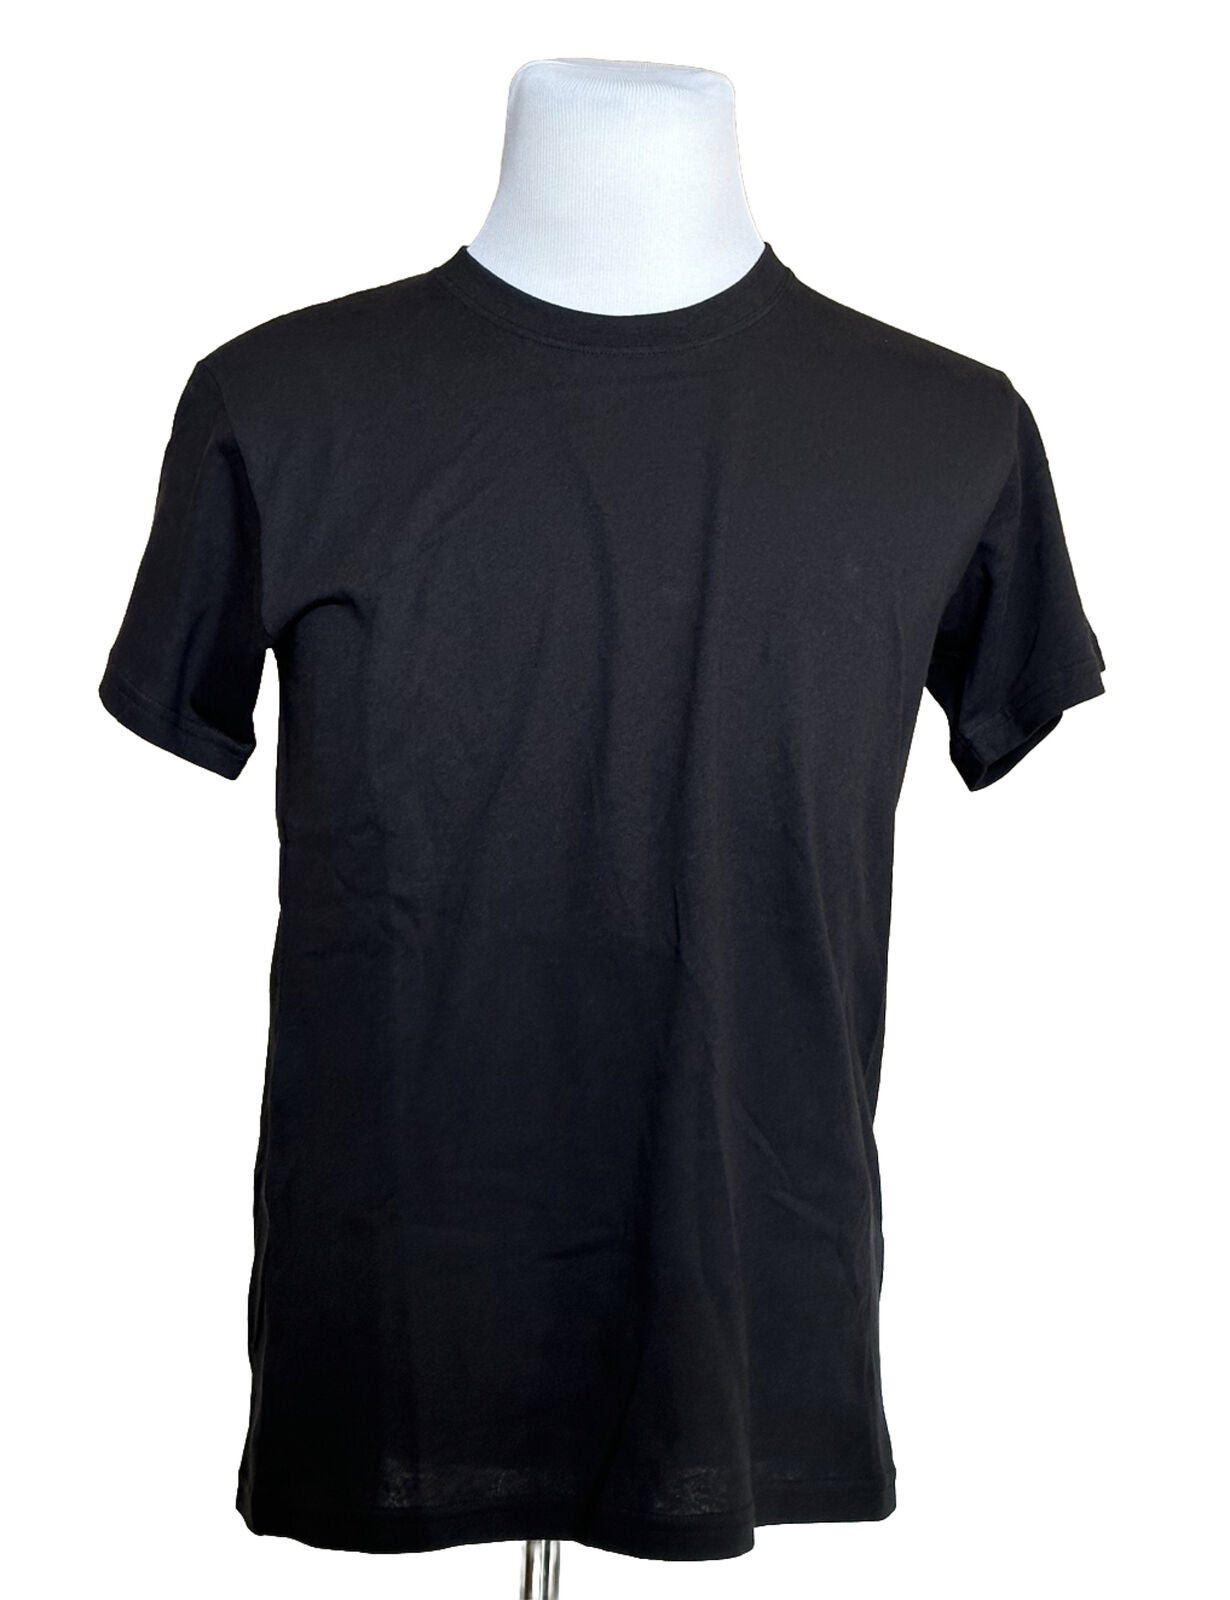 NWT Bottega Veneta Женская легкая хлопковая футболка Sunset, размер 42 613935